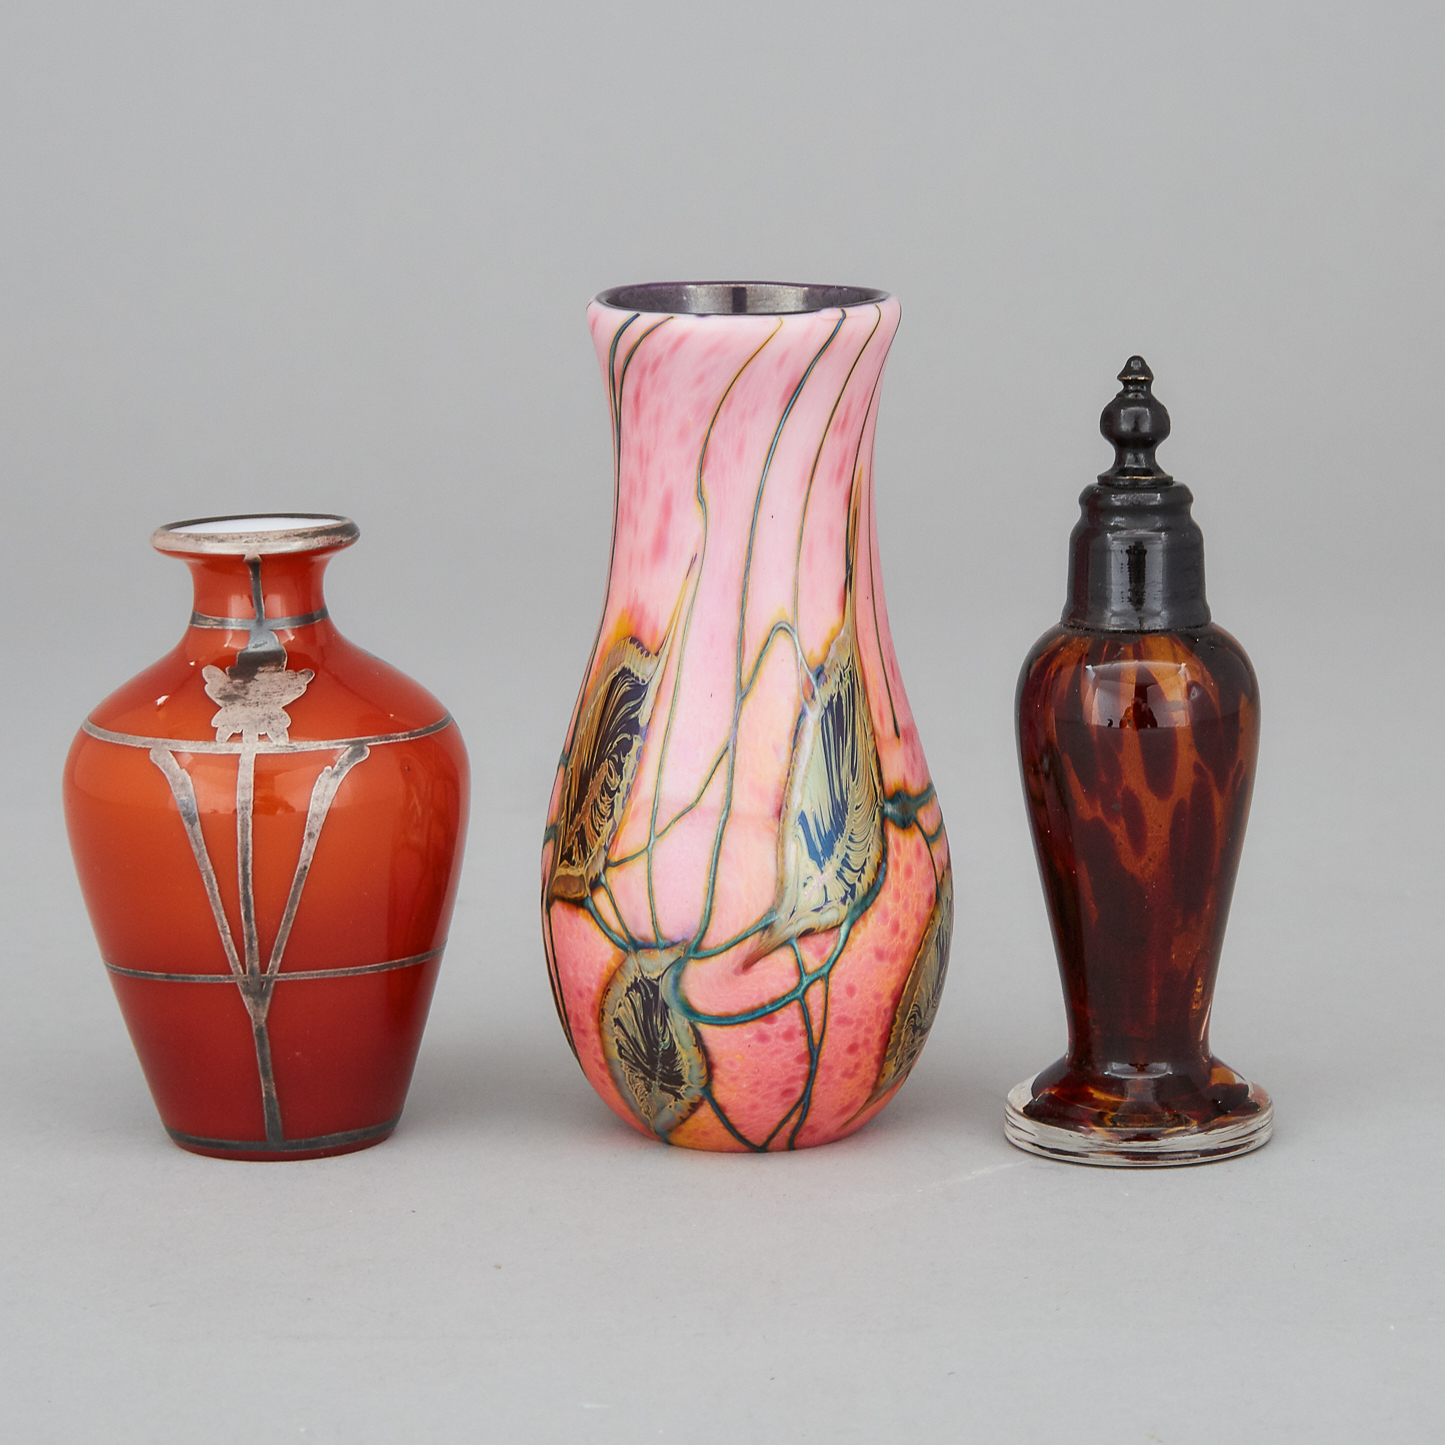 David Lotton Glass Small Vase, Silver Overlaid Coloured Glass Vase and Tortoiseshell Glass Perfume Bottle, 20th century